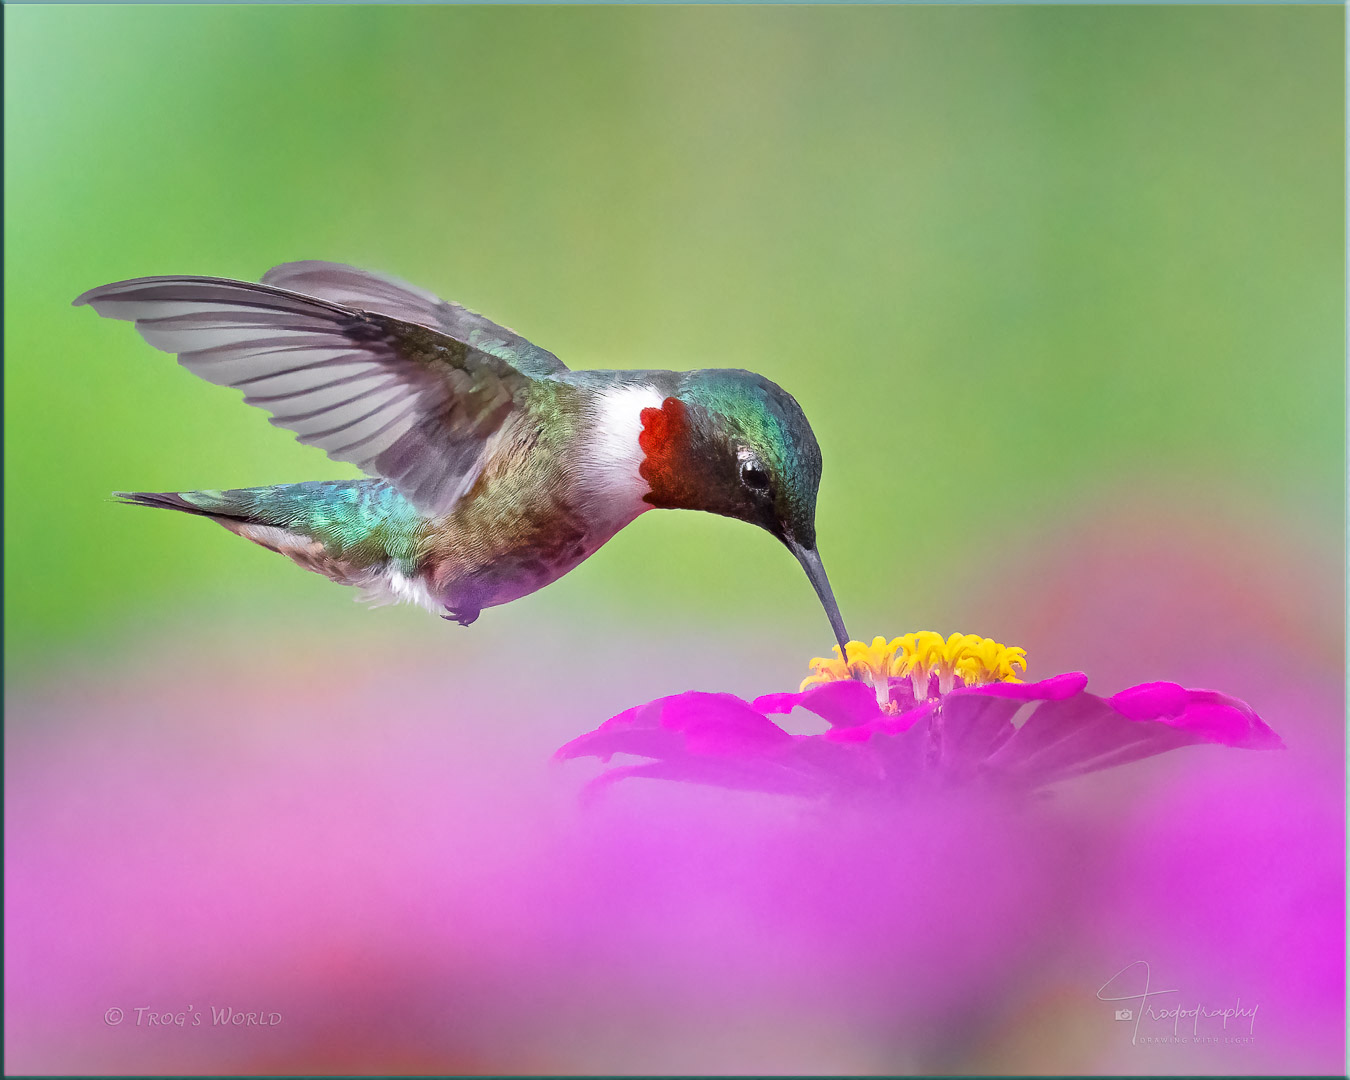 Male Ruby-throated Hummingbird on a flower